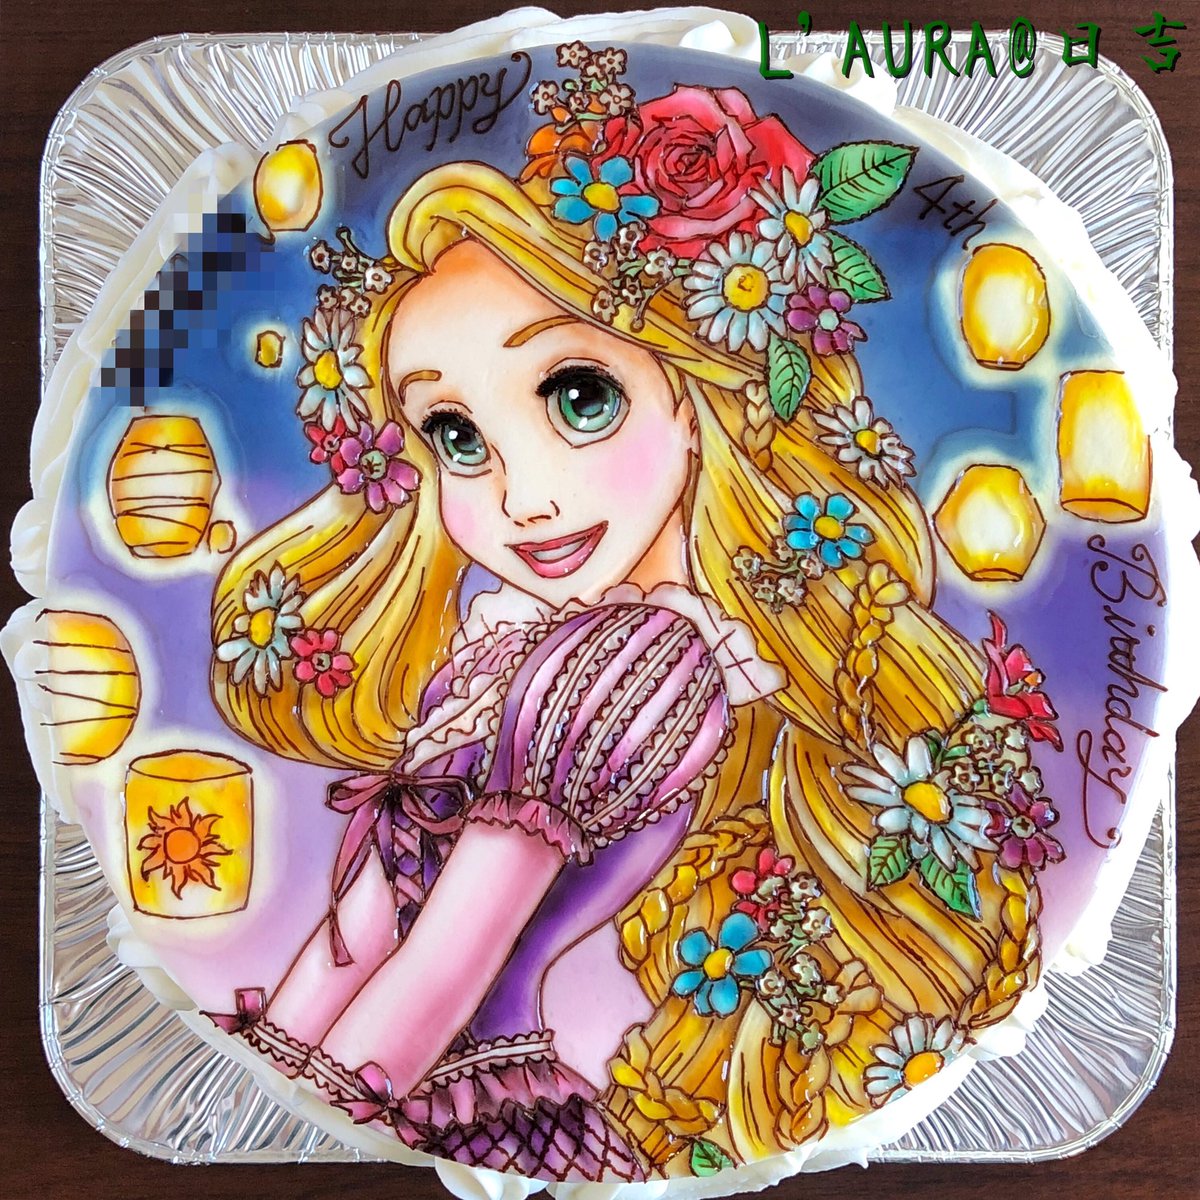 L Aura ローラ アレルギー対応とオーダーケーキの店 Gateaulaura Twitter